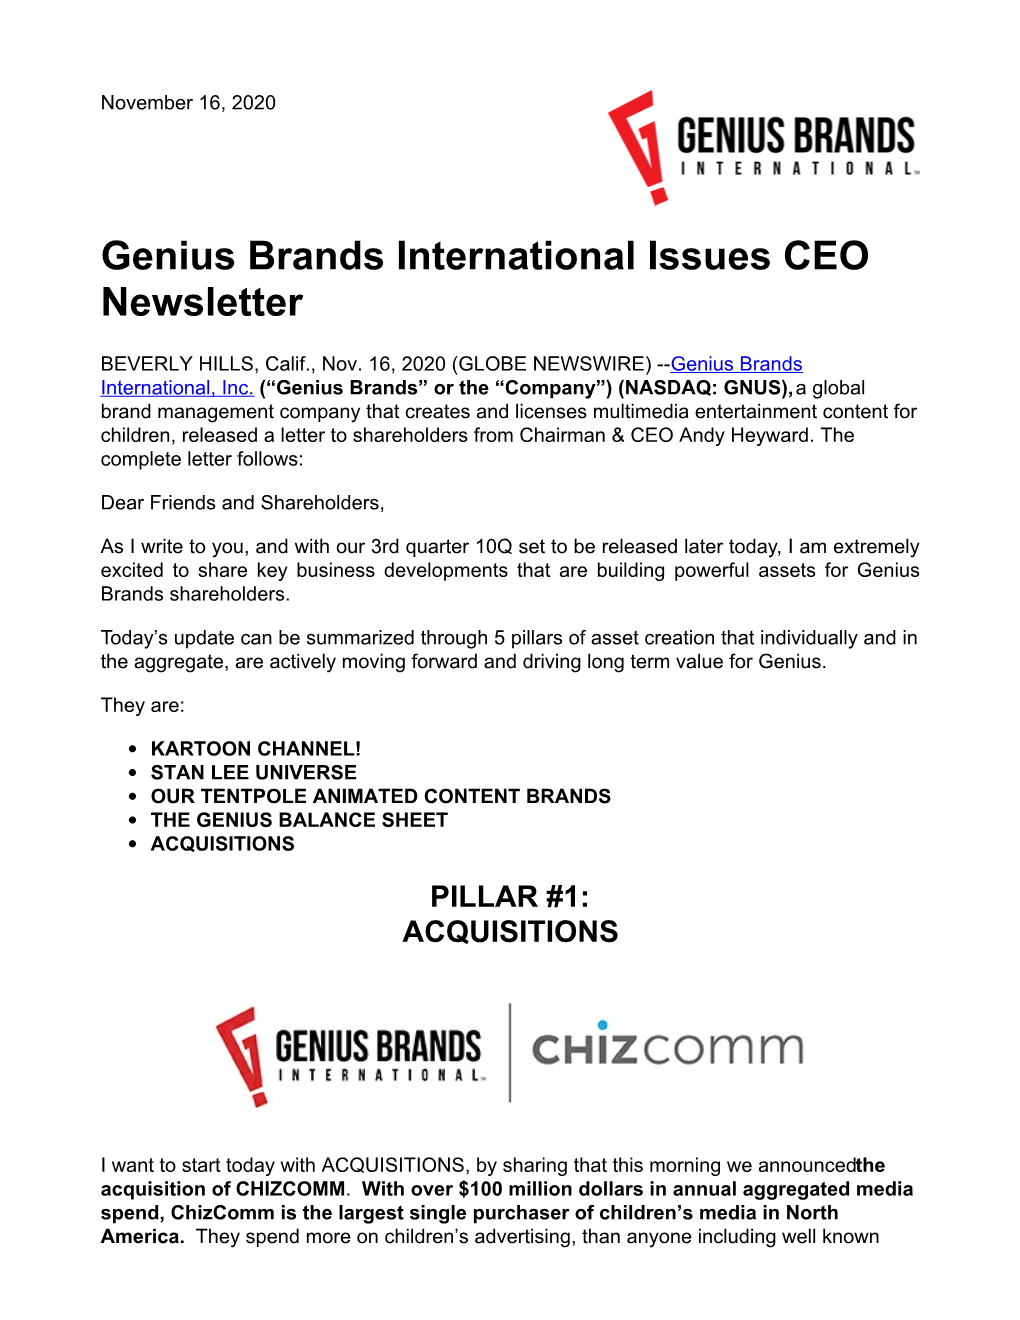 Genius Brands International Issues CEO Newsletter